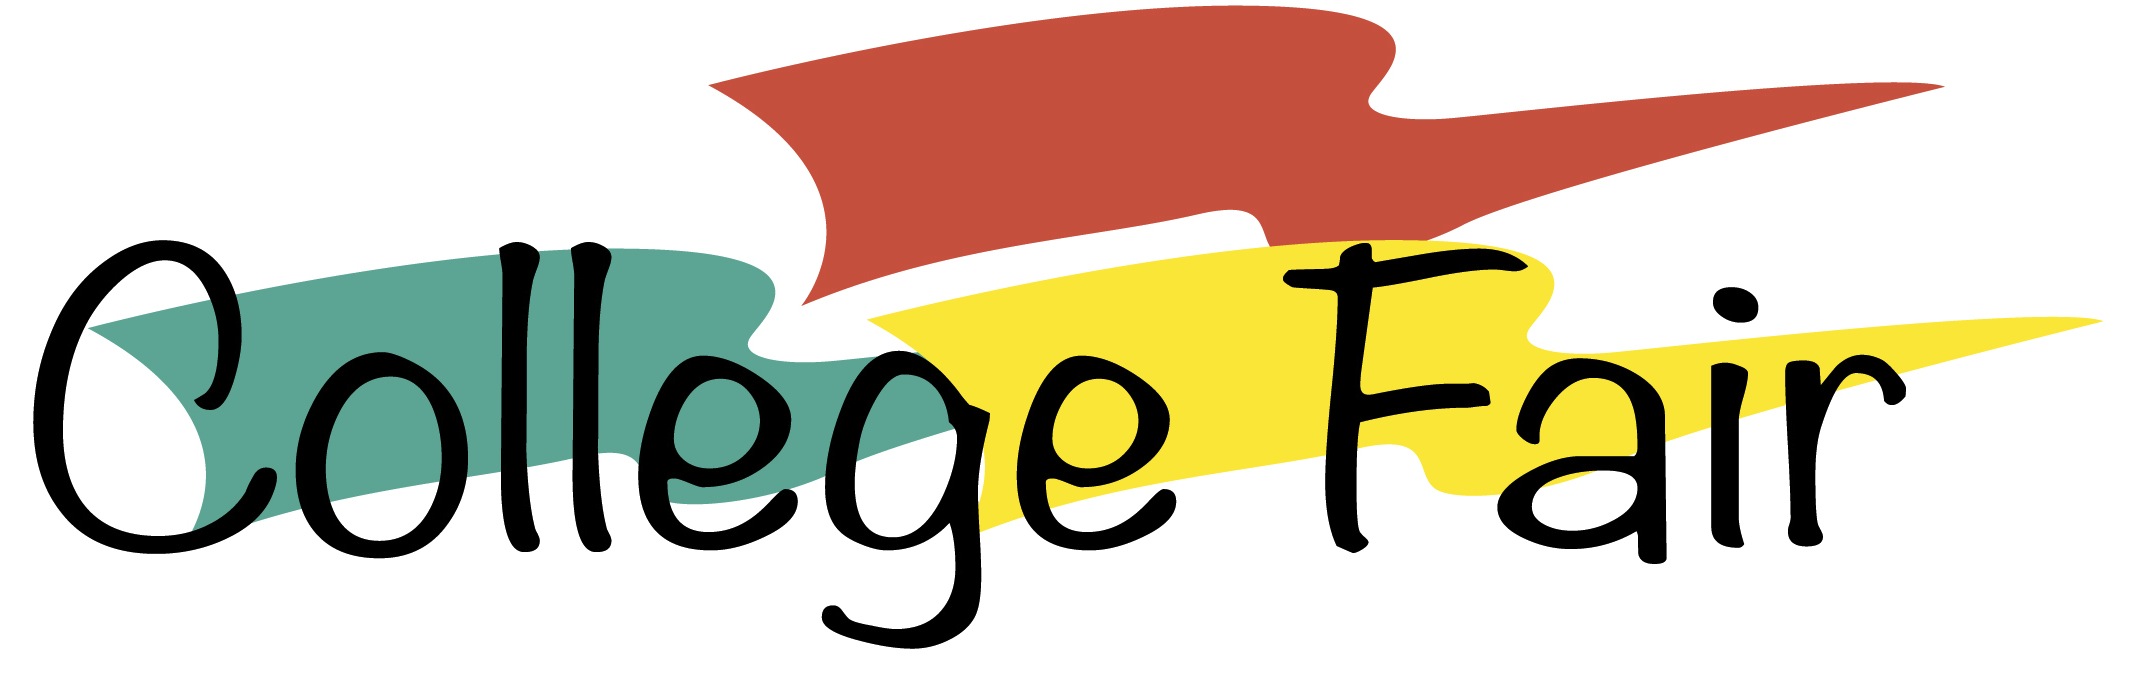 college logo clip art free - photo #12